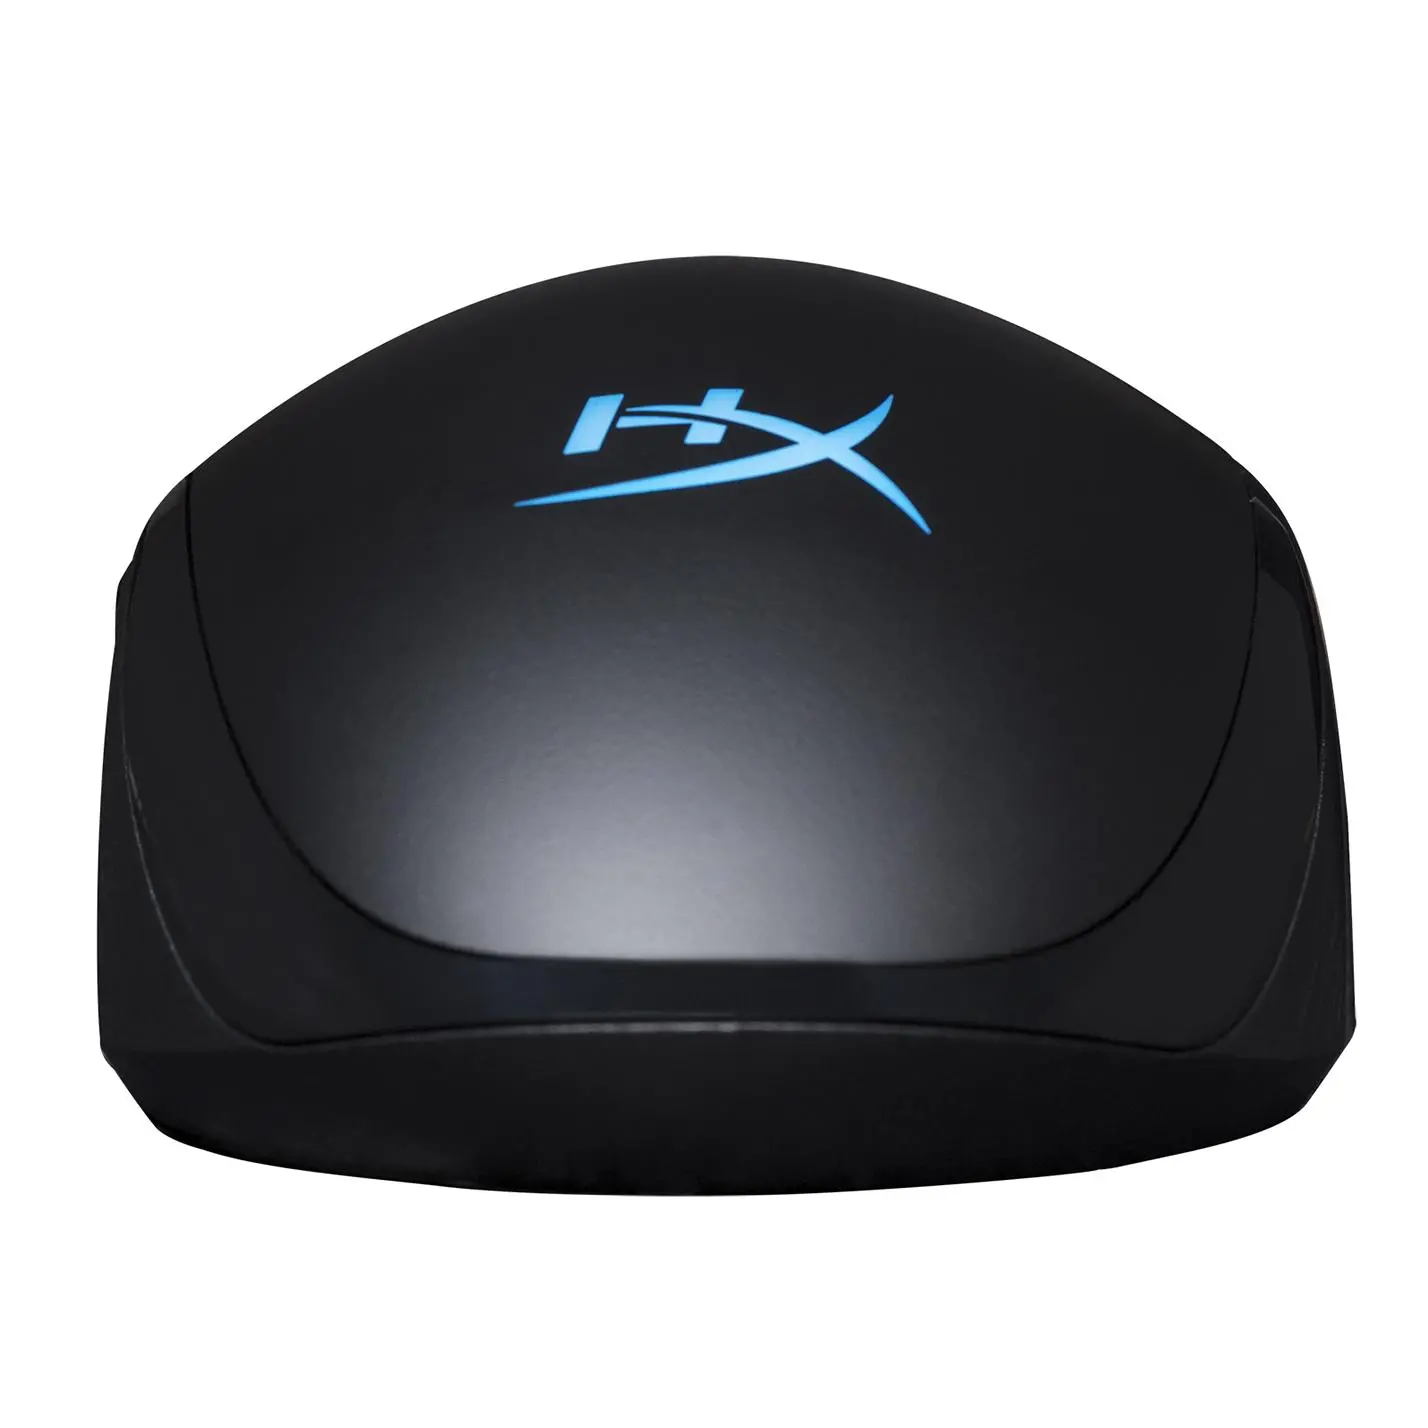 Геймърска мишка HyperX Pulsefire Core, RGB, USB, Черен - image 3